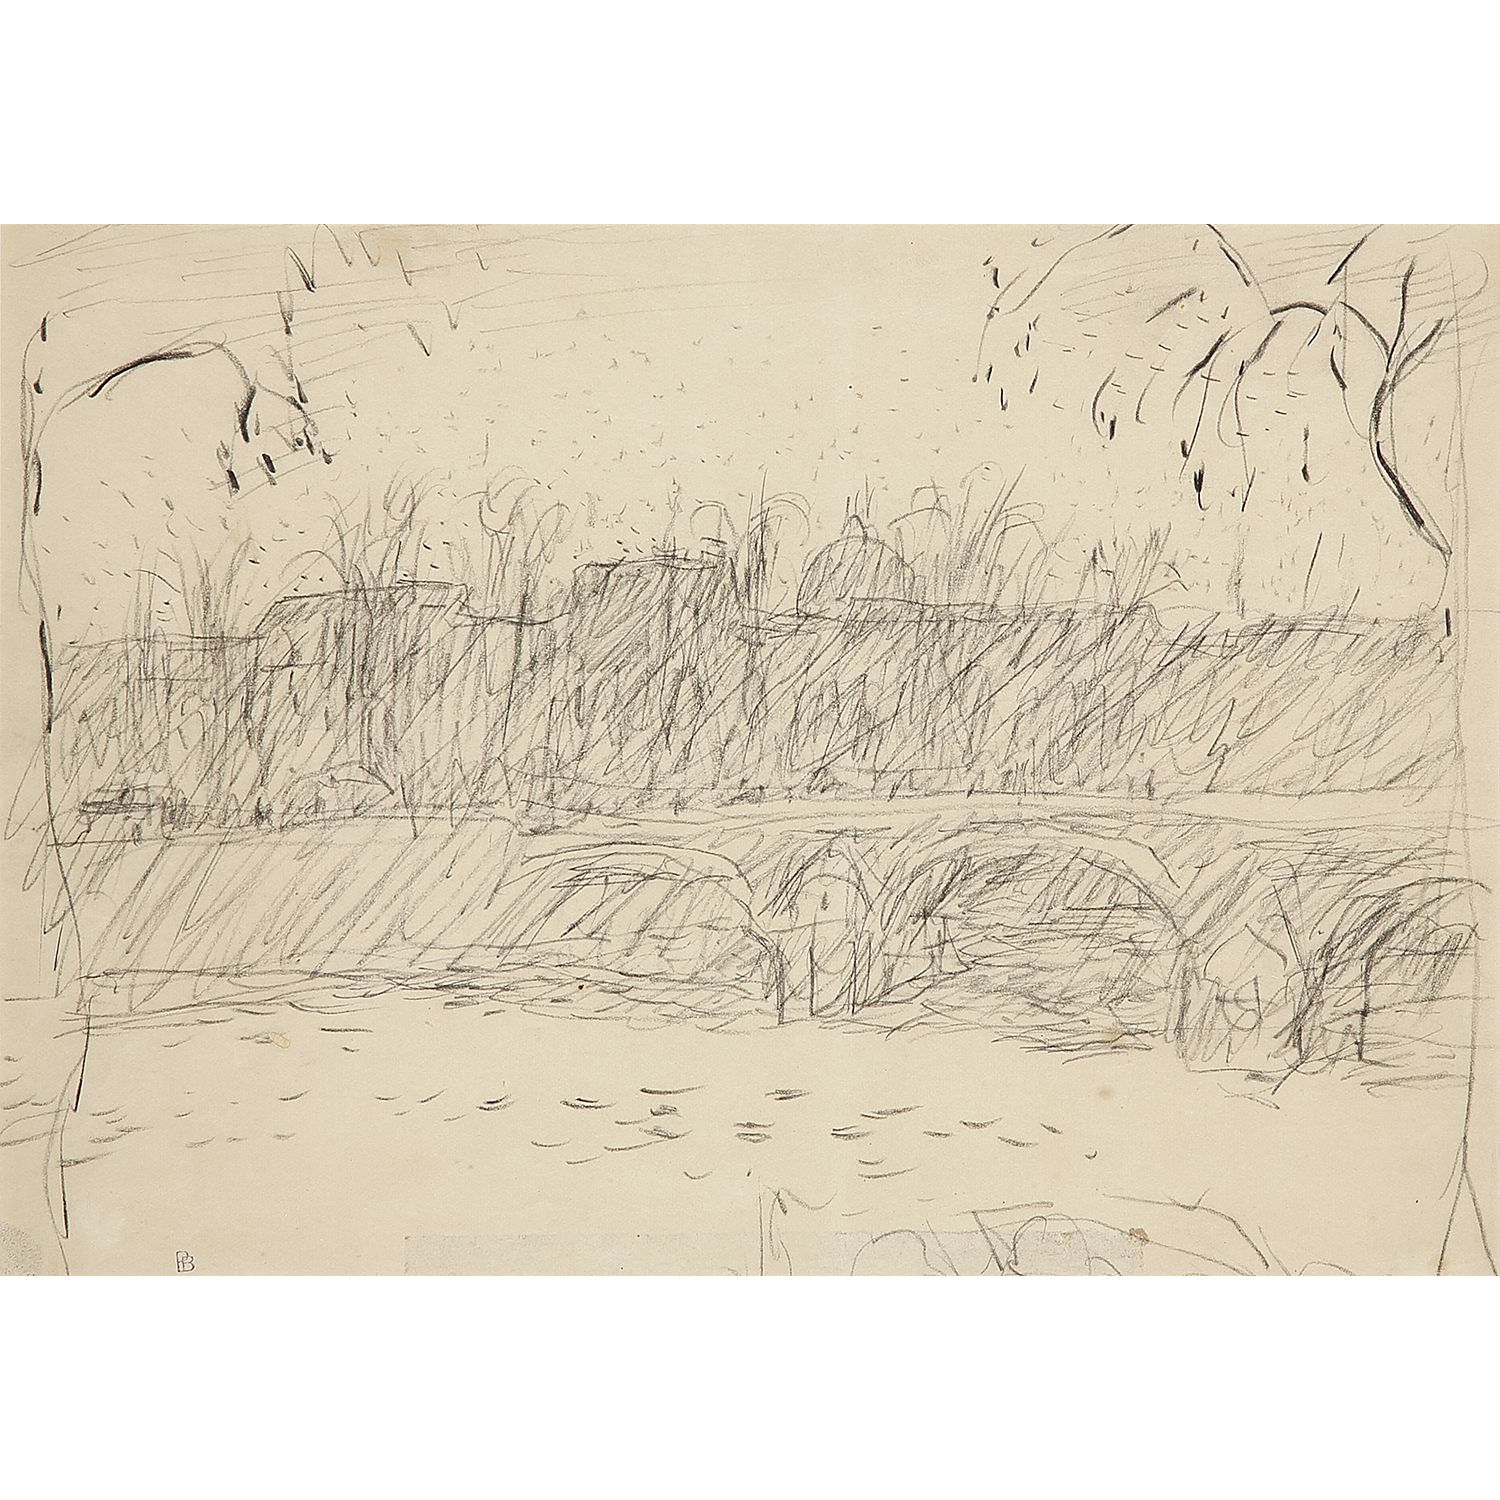 Null 皮埃尔-博纳尔(1867-1947) 
新桥 
纸上木炭 
左下角有艺术家的姓名缩写(L.3888)
纸上炭笔，左下角盖有艺术家姓名的缩写(L.388&hellip;